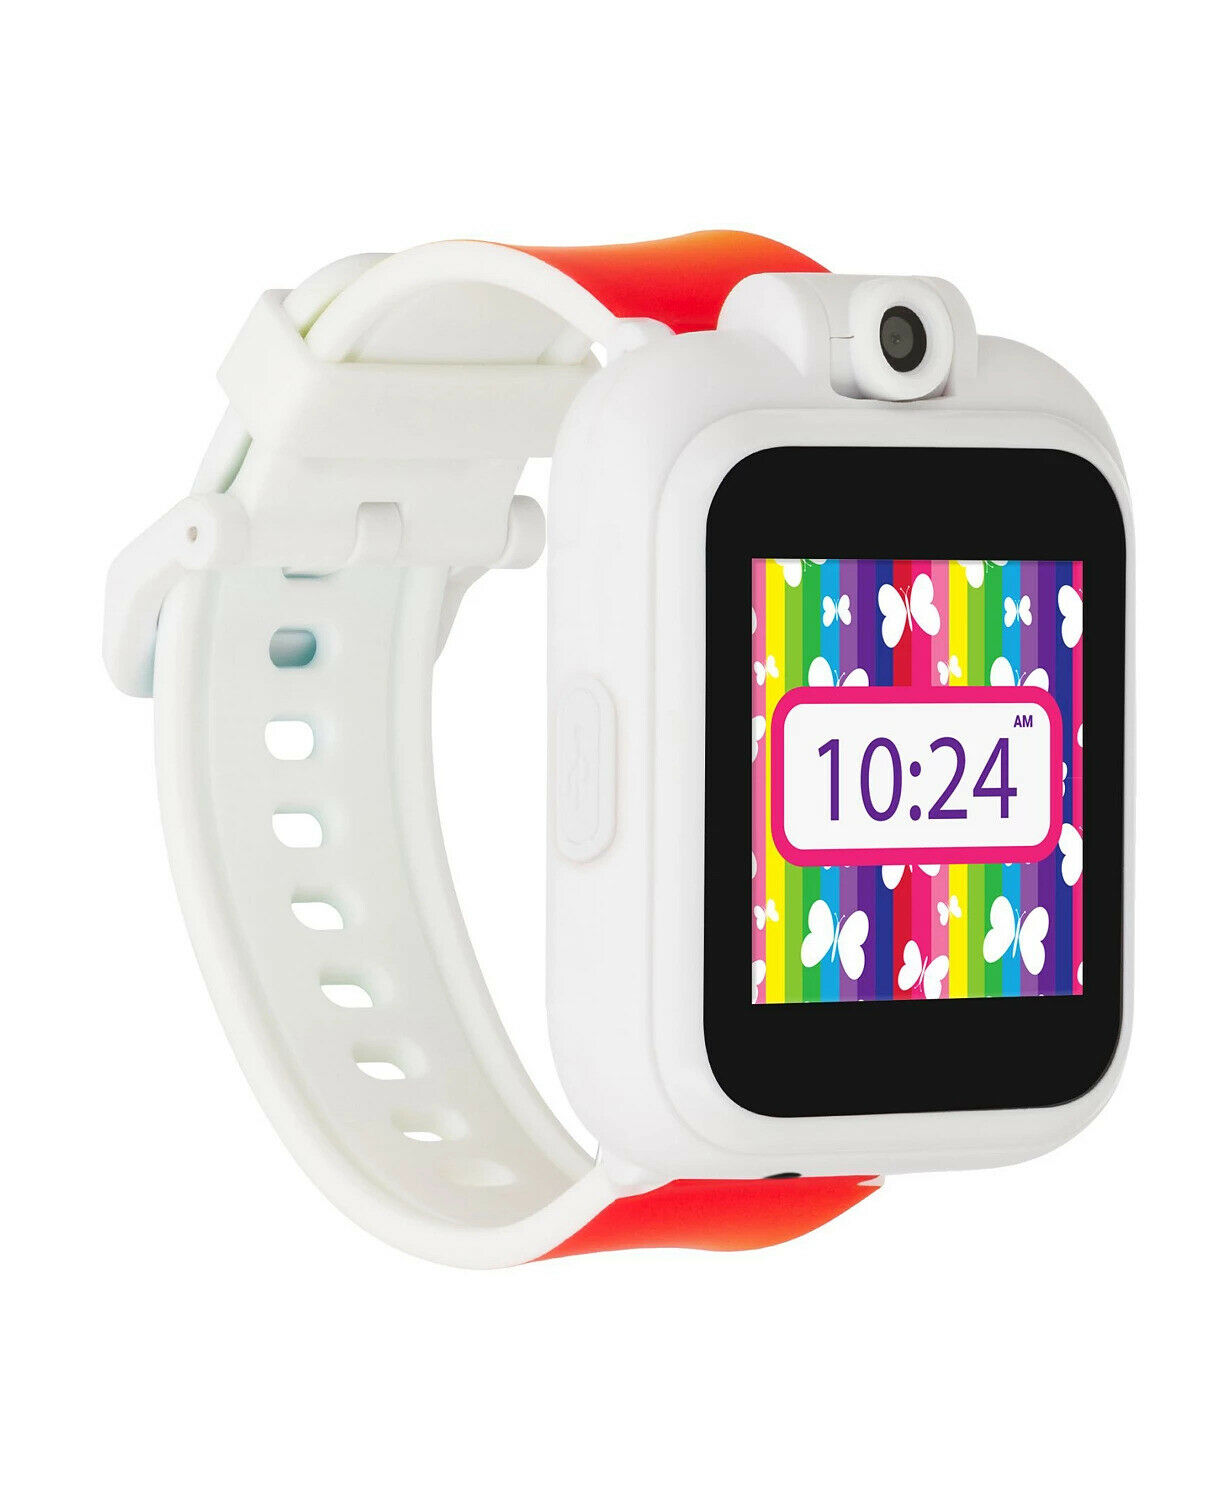 Playzoom 2 Educational Smartwatch For Kids: Rainbow Print